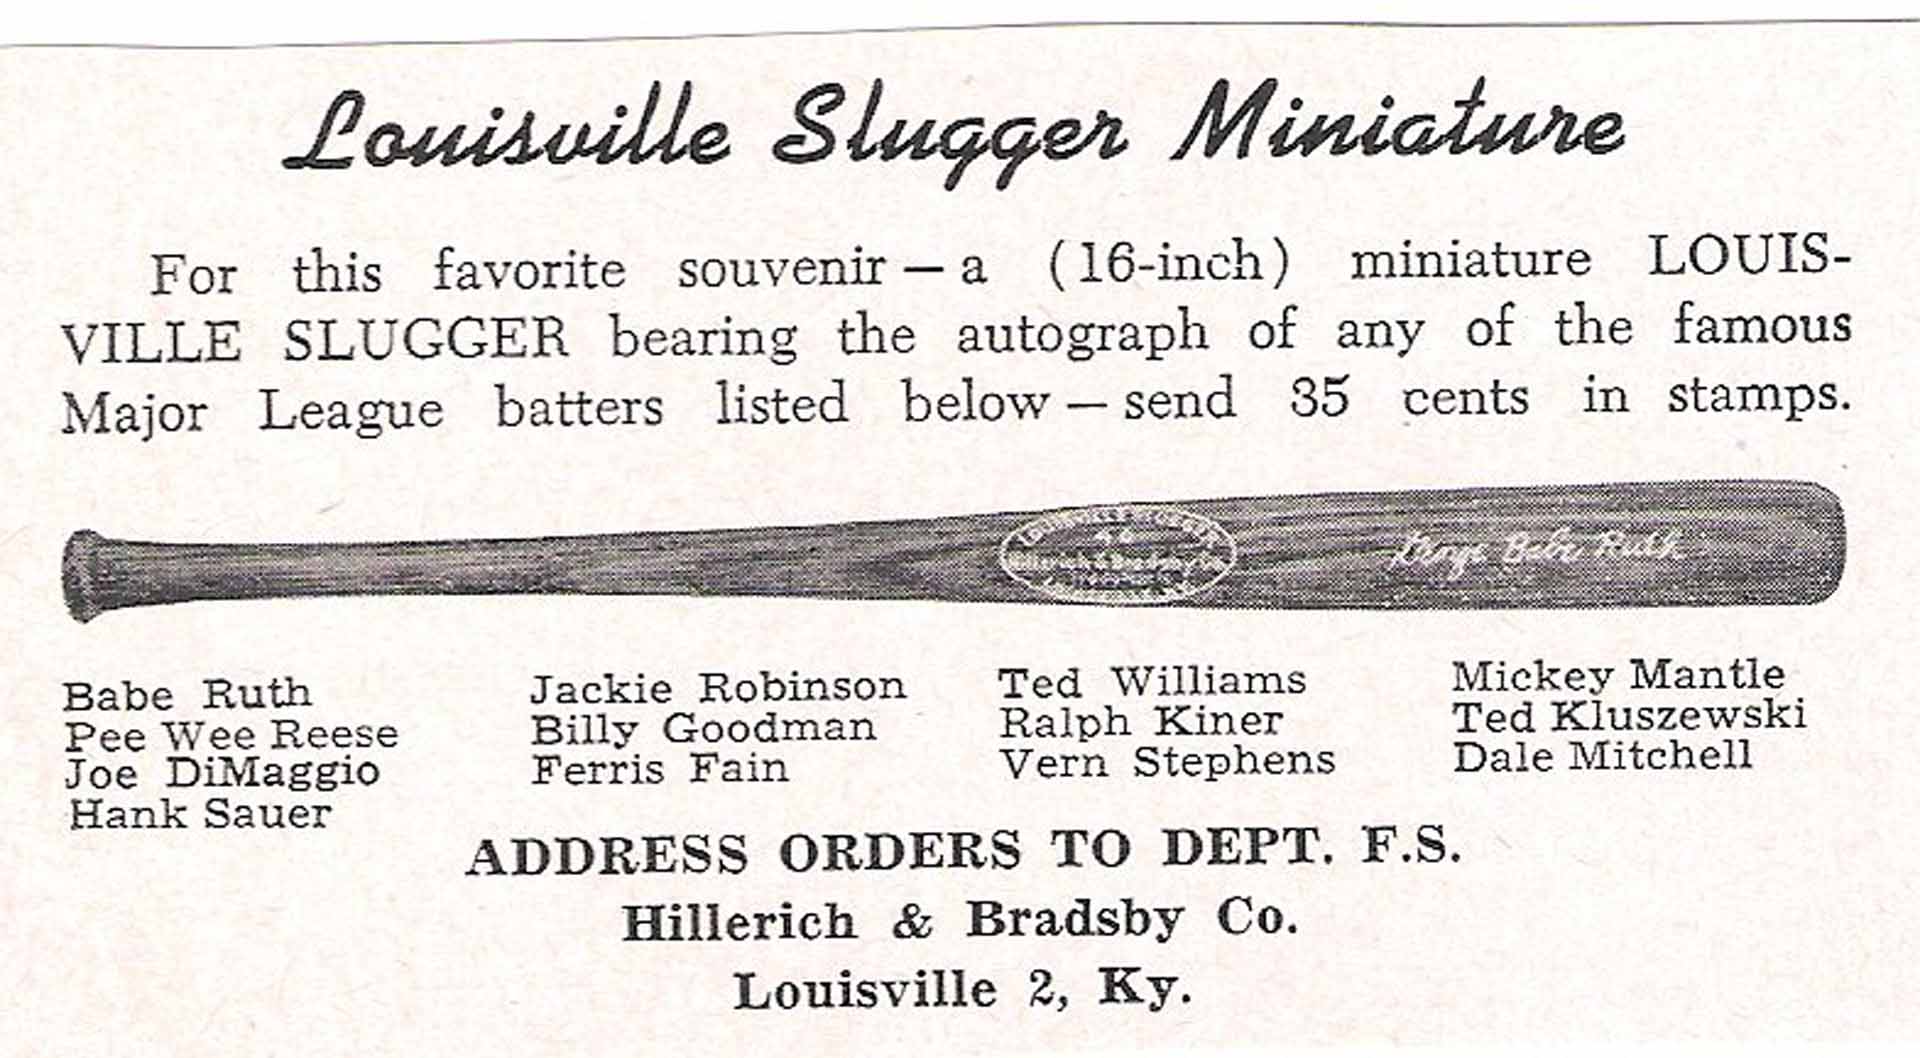 1953 famous slugger